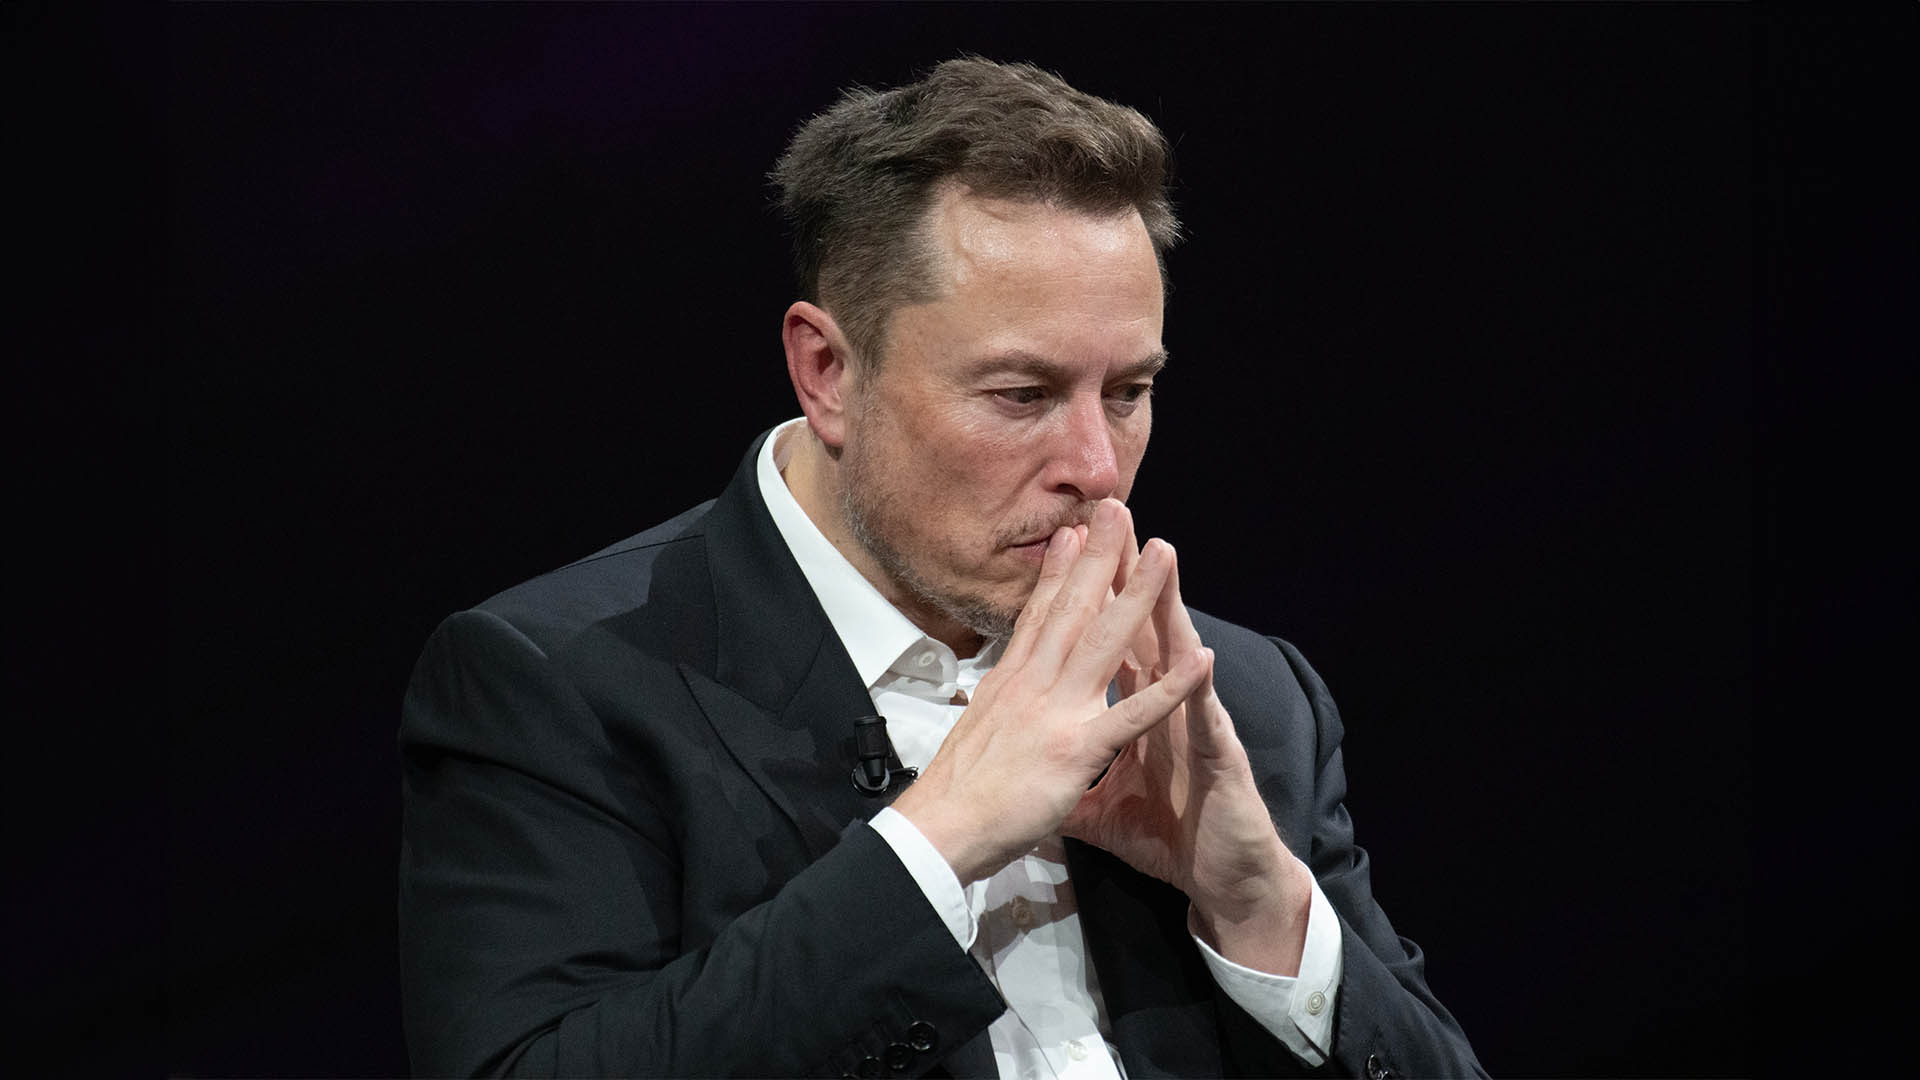 Tesla shares drop amid concerns over Musk’s plans